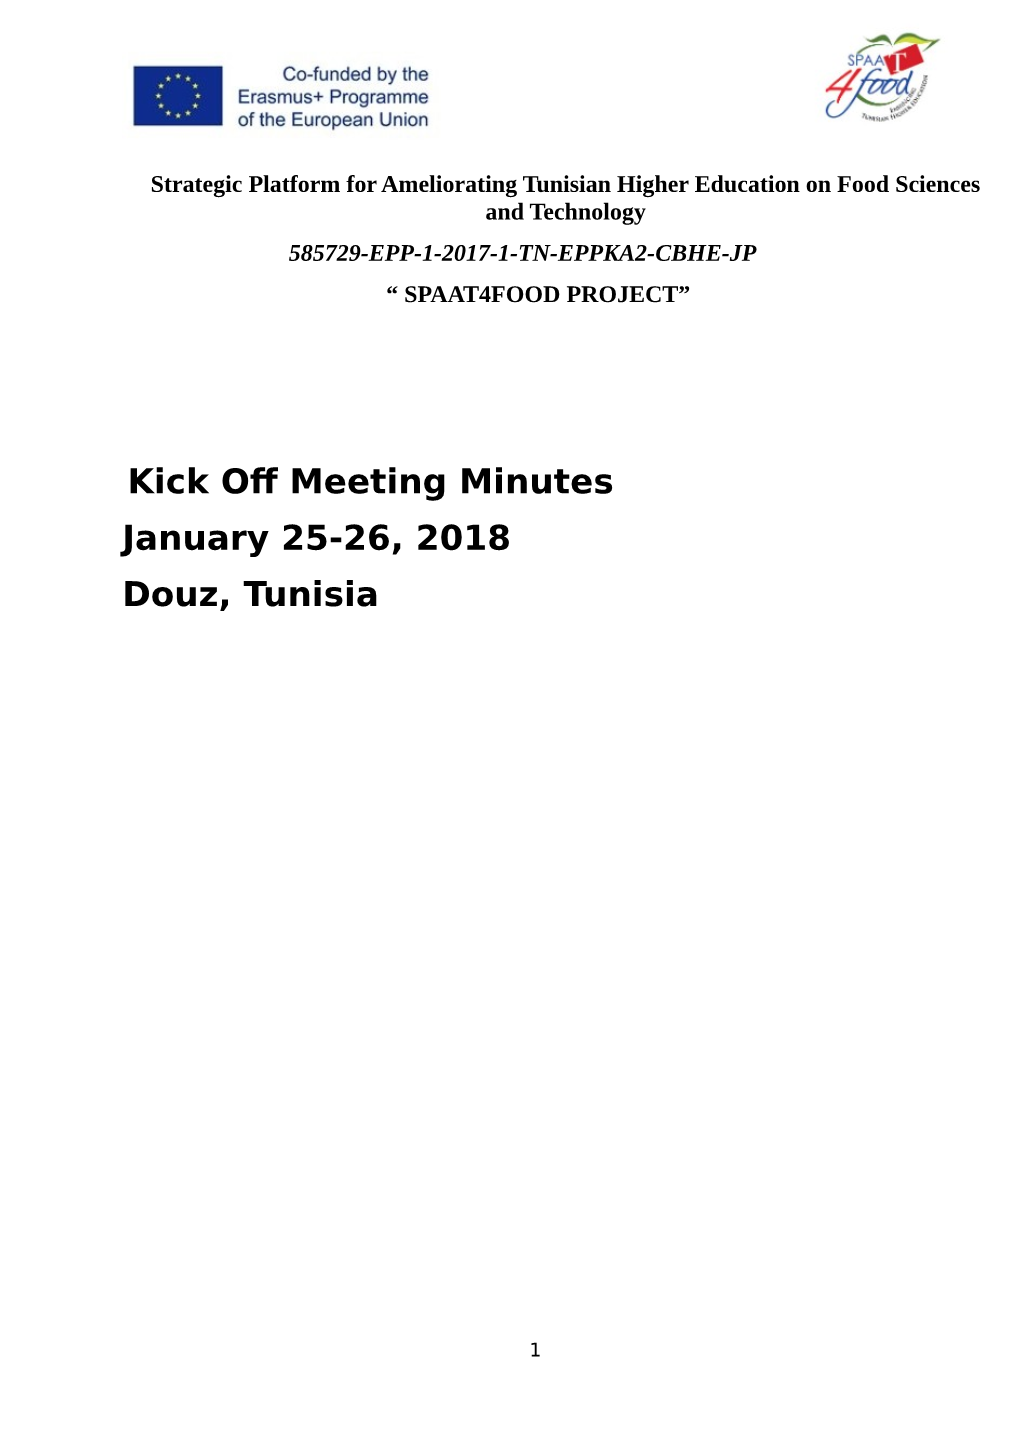 Kick Off Meeting Minutes January 25-26, 2018 Douz, Tunisia